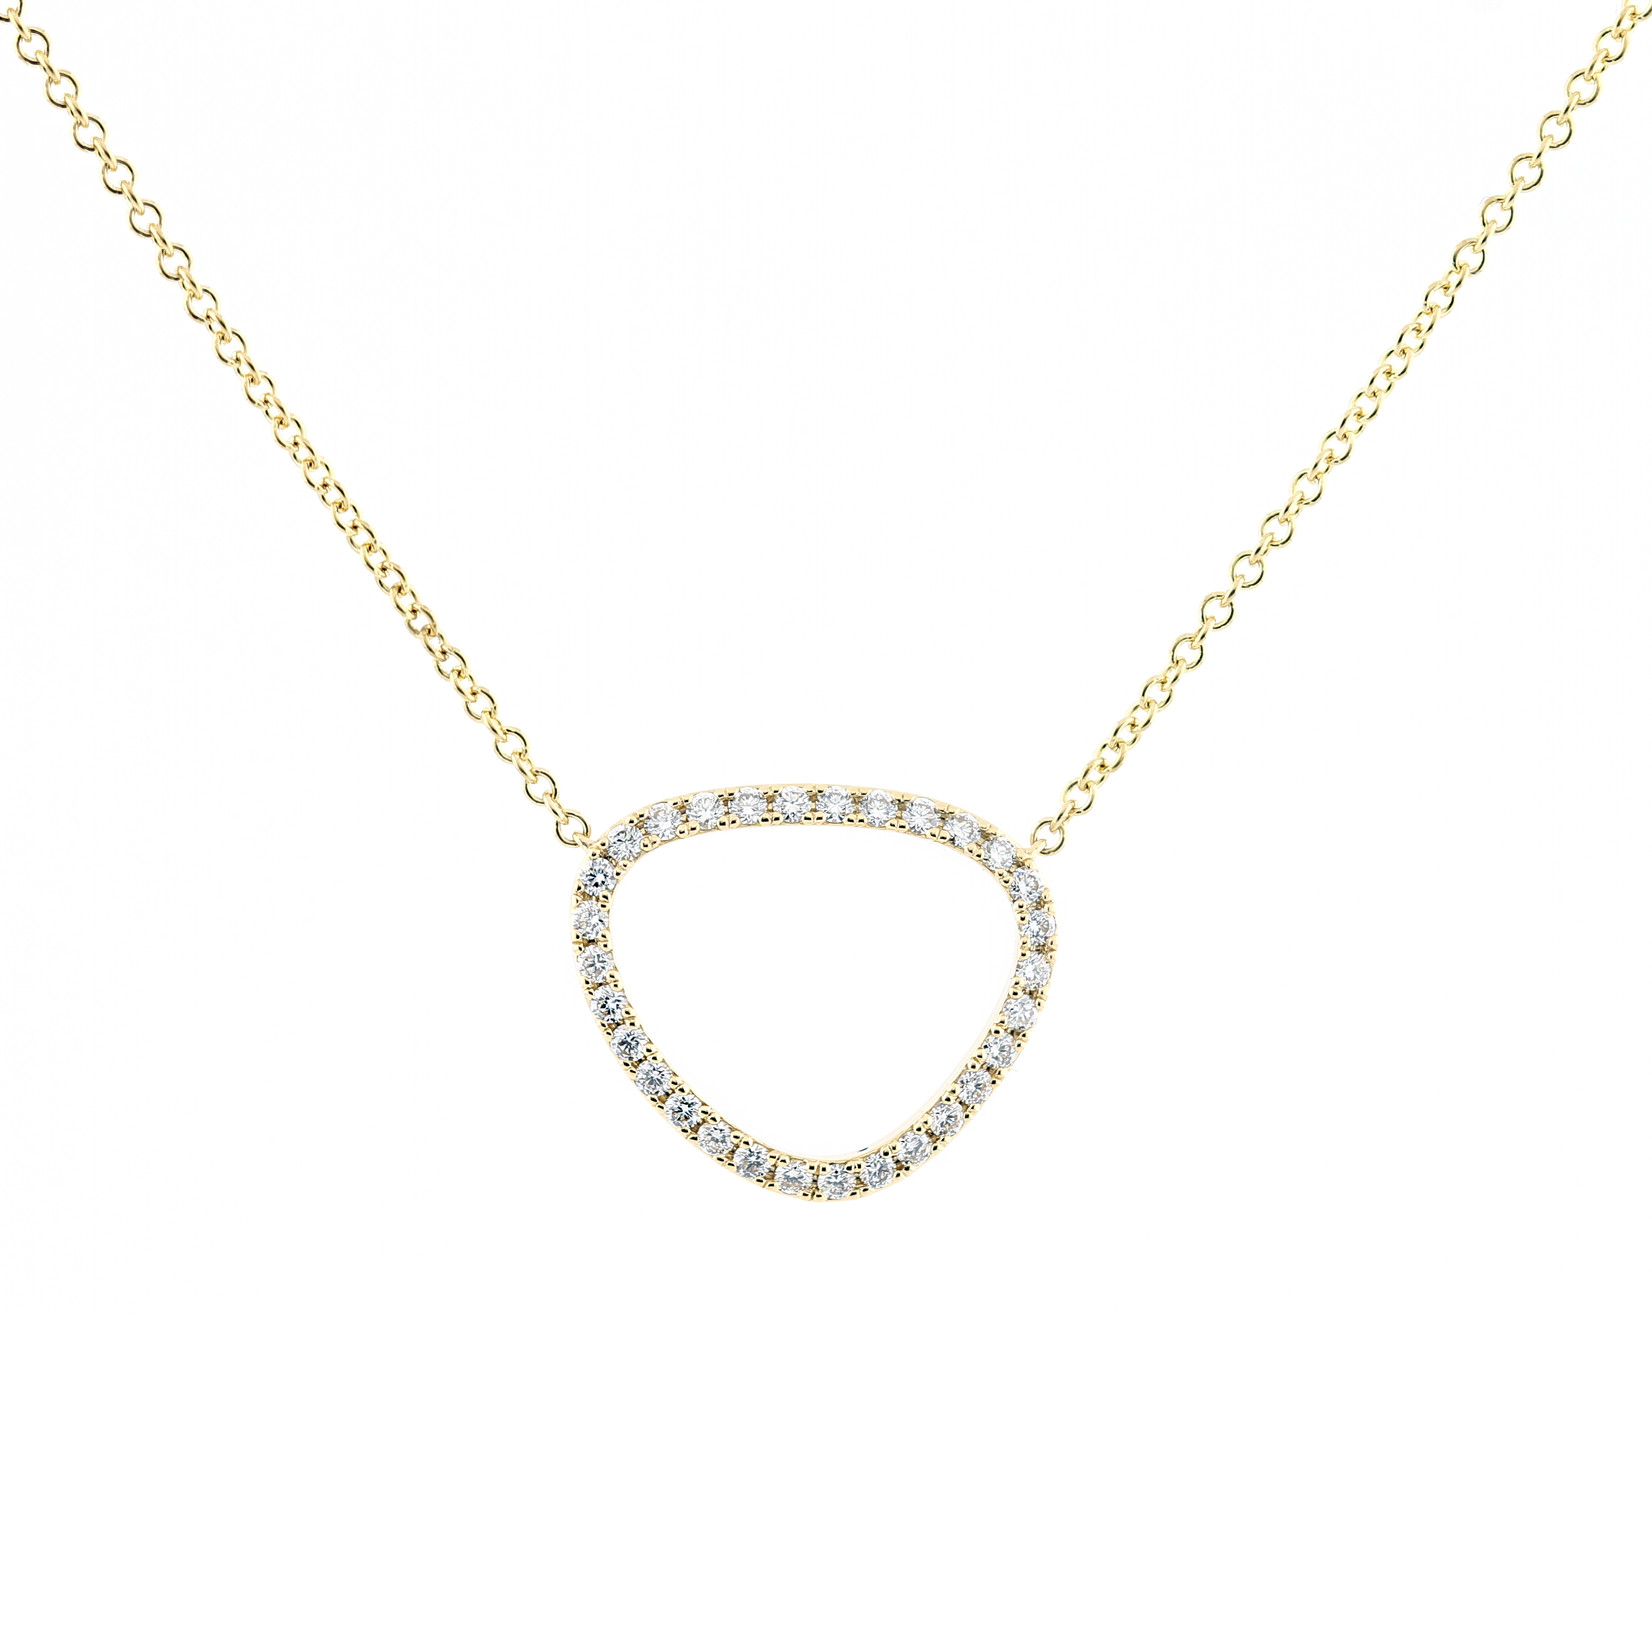 Baxter Moerman Piedras Diamond Frame Necklace